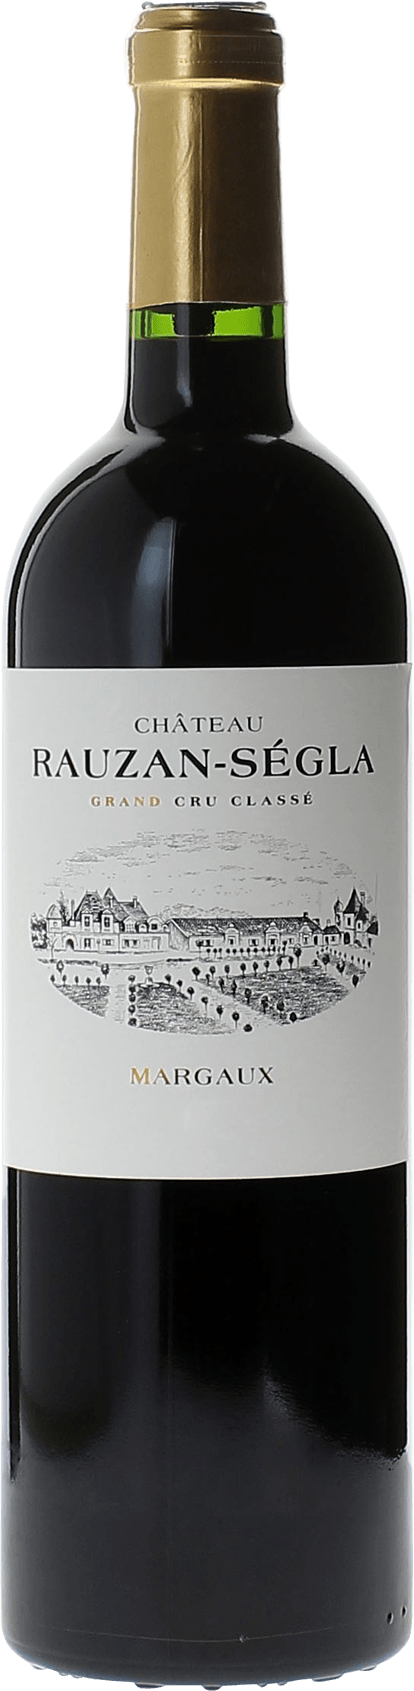 Rauzan-segla 2020 2me Grand cru class Margaux, Bordeaux rouge